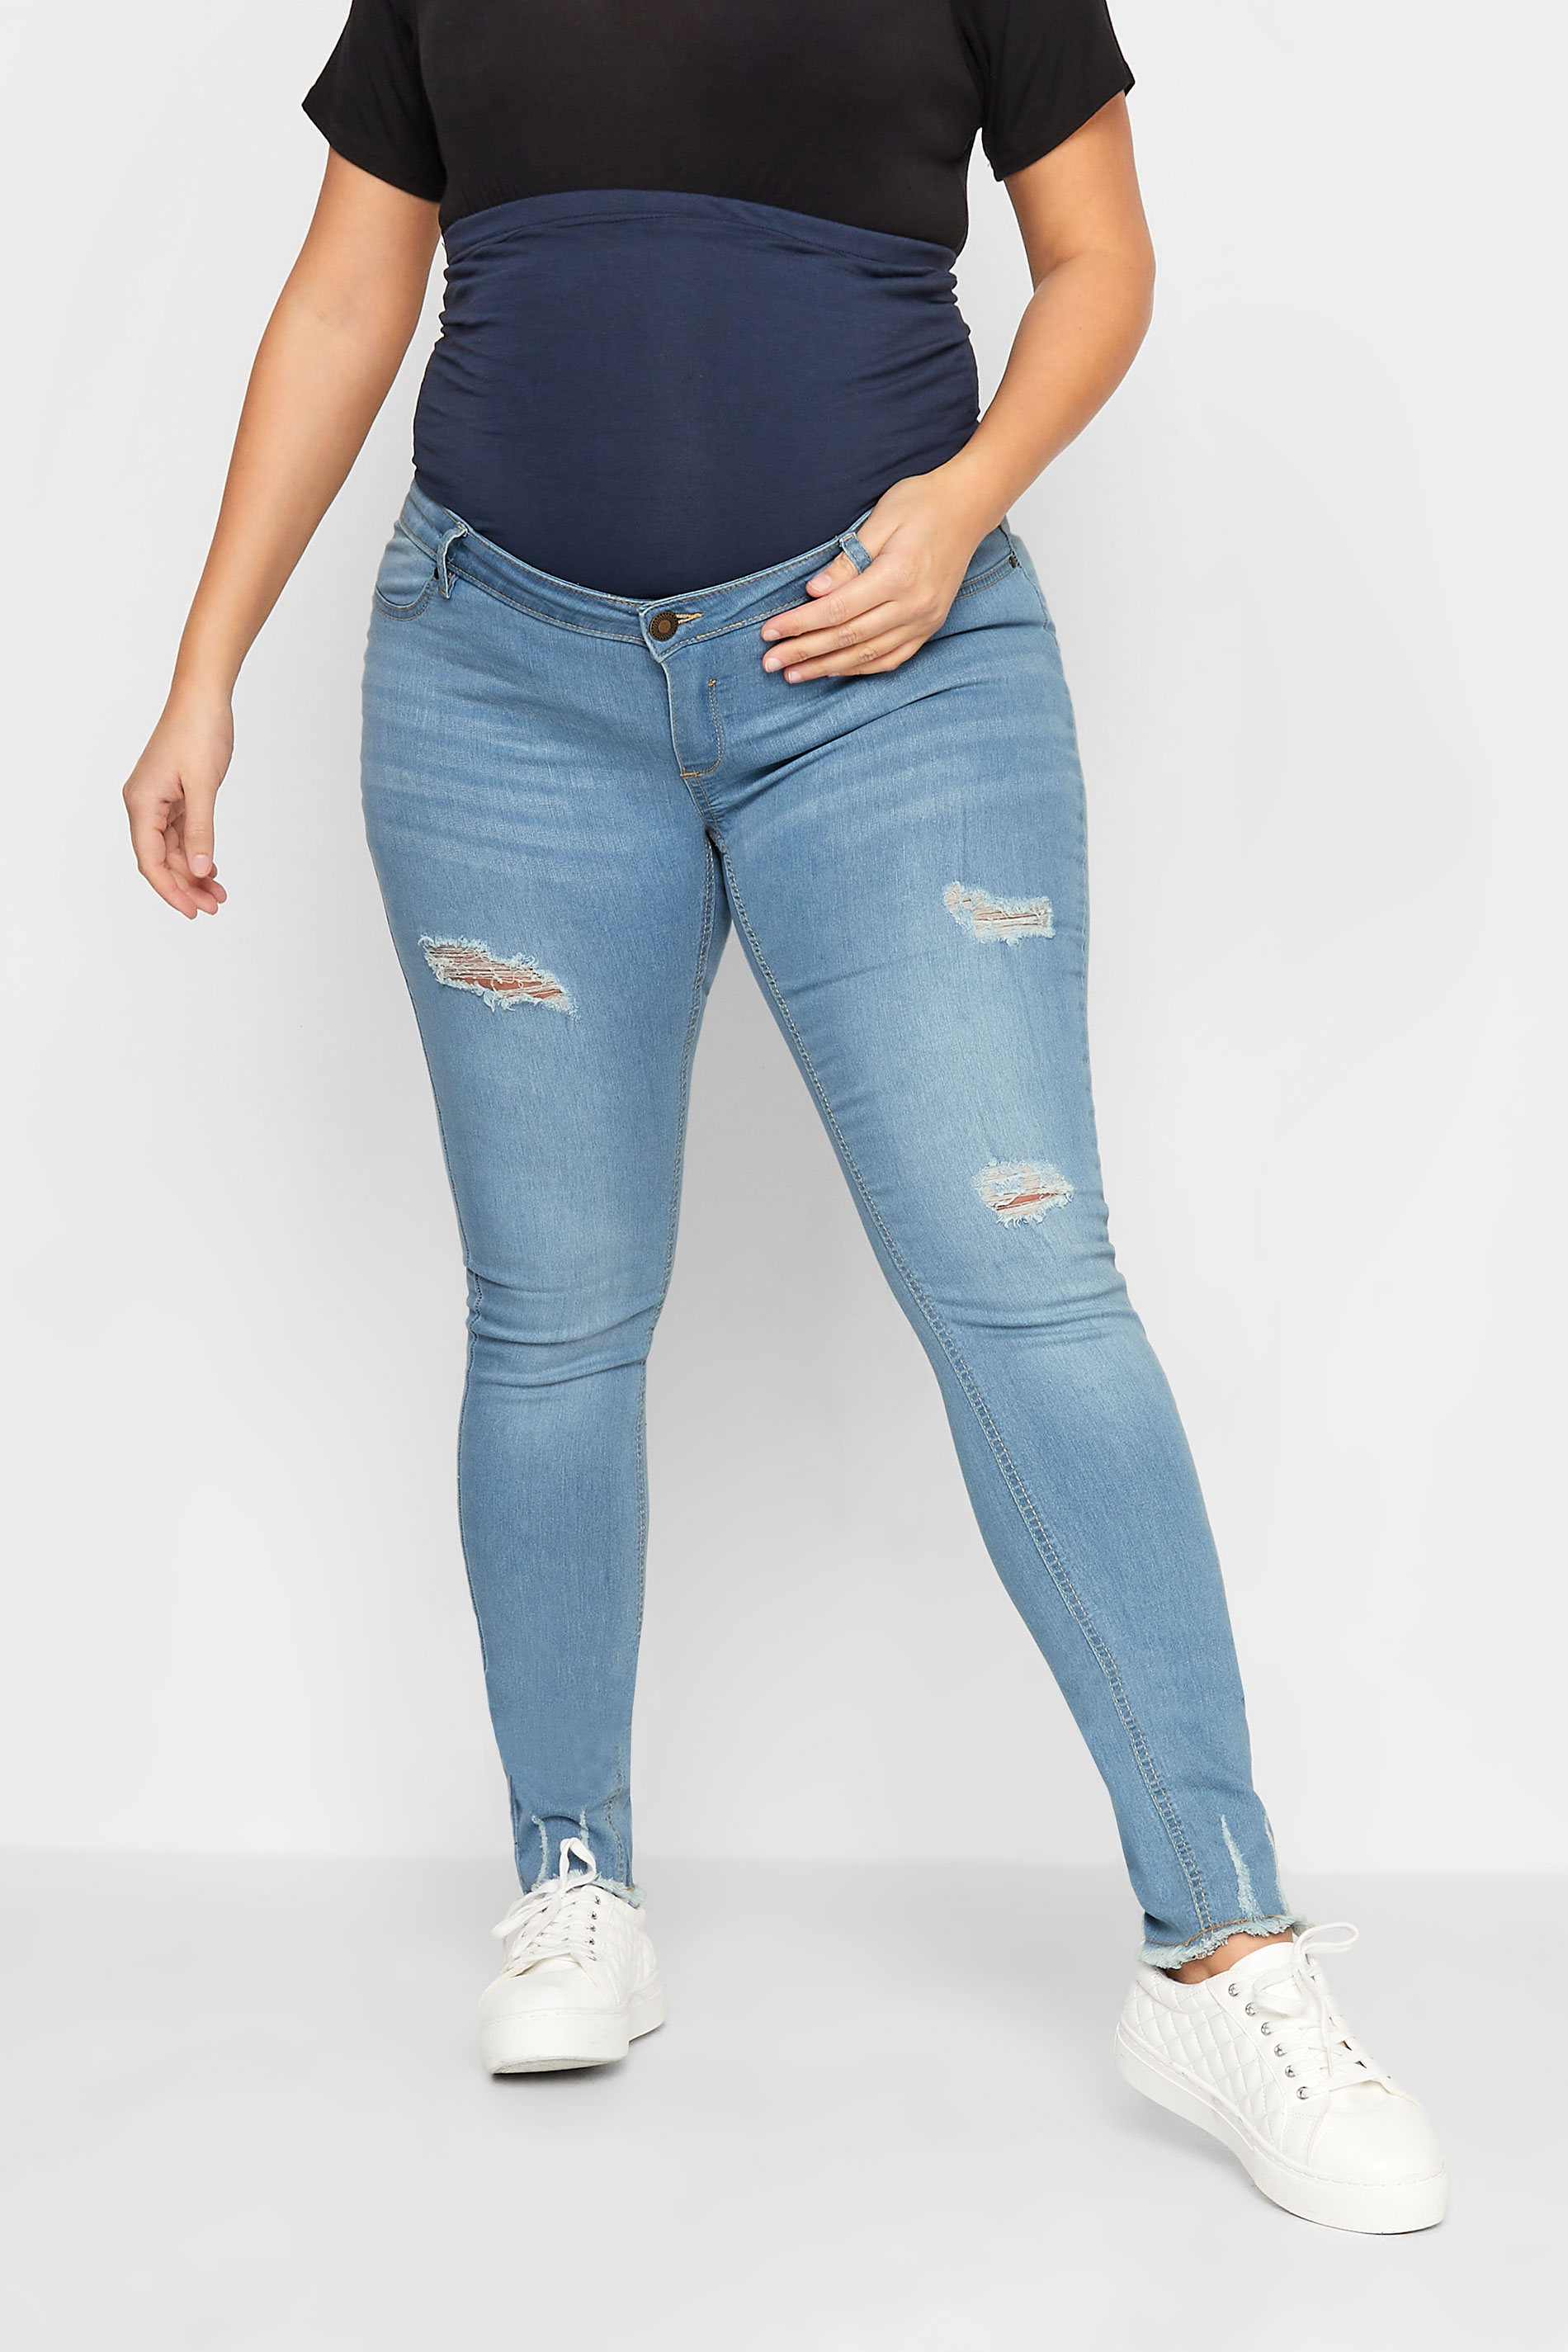 Tall Women's LTS Maternity Blue Distressed Skinny Jeans | Long Tall Sally 1